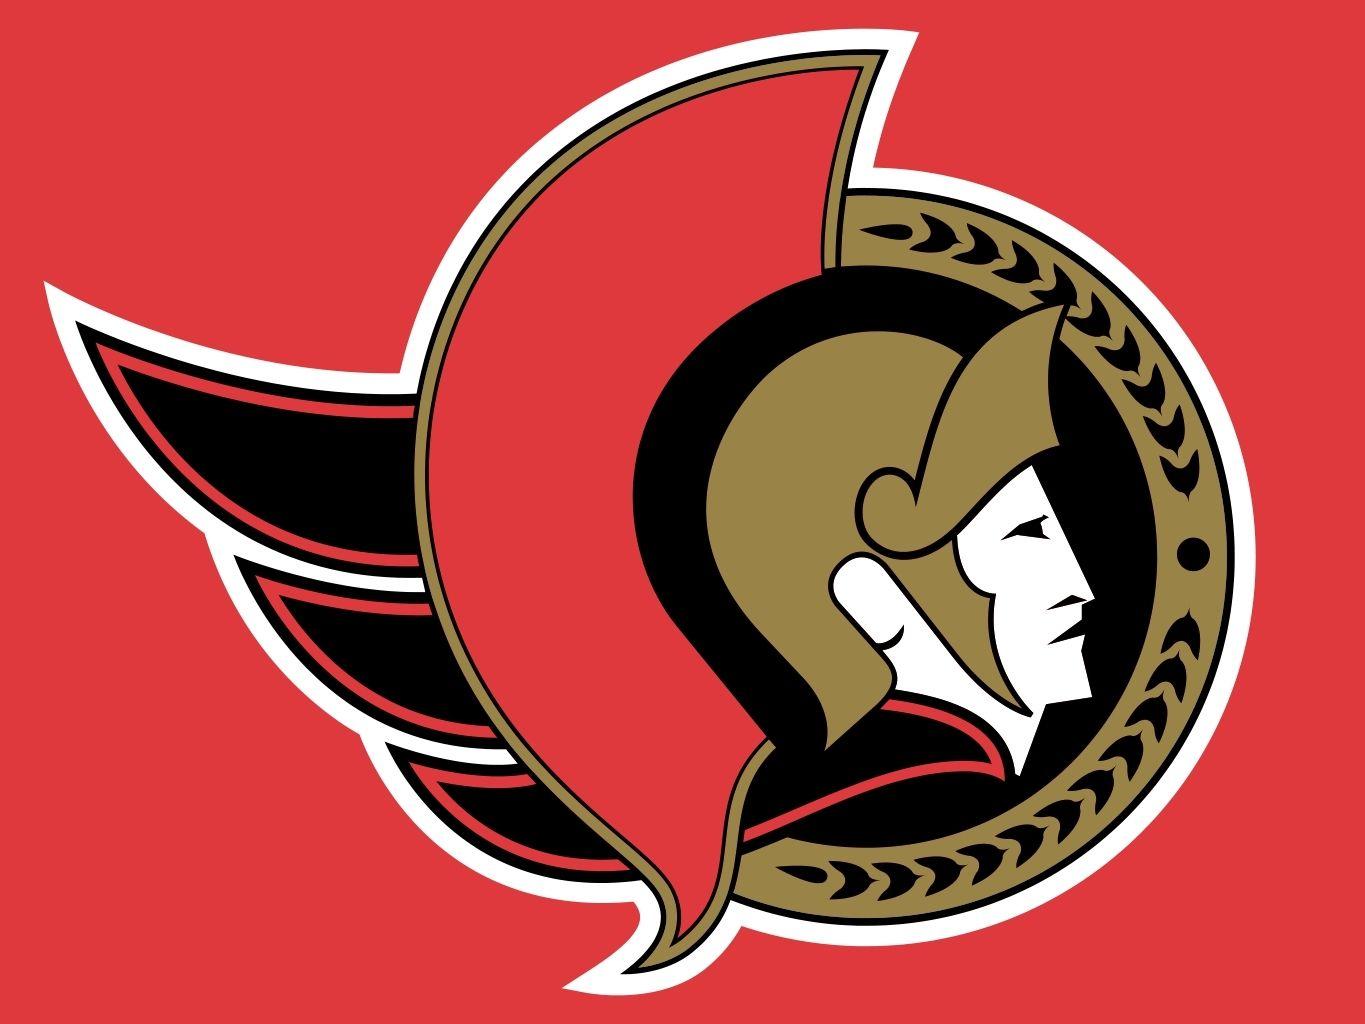 Sens Logo - Old Ottawa Senators Logo - Imported - Sens Central